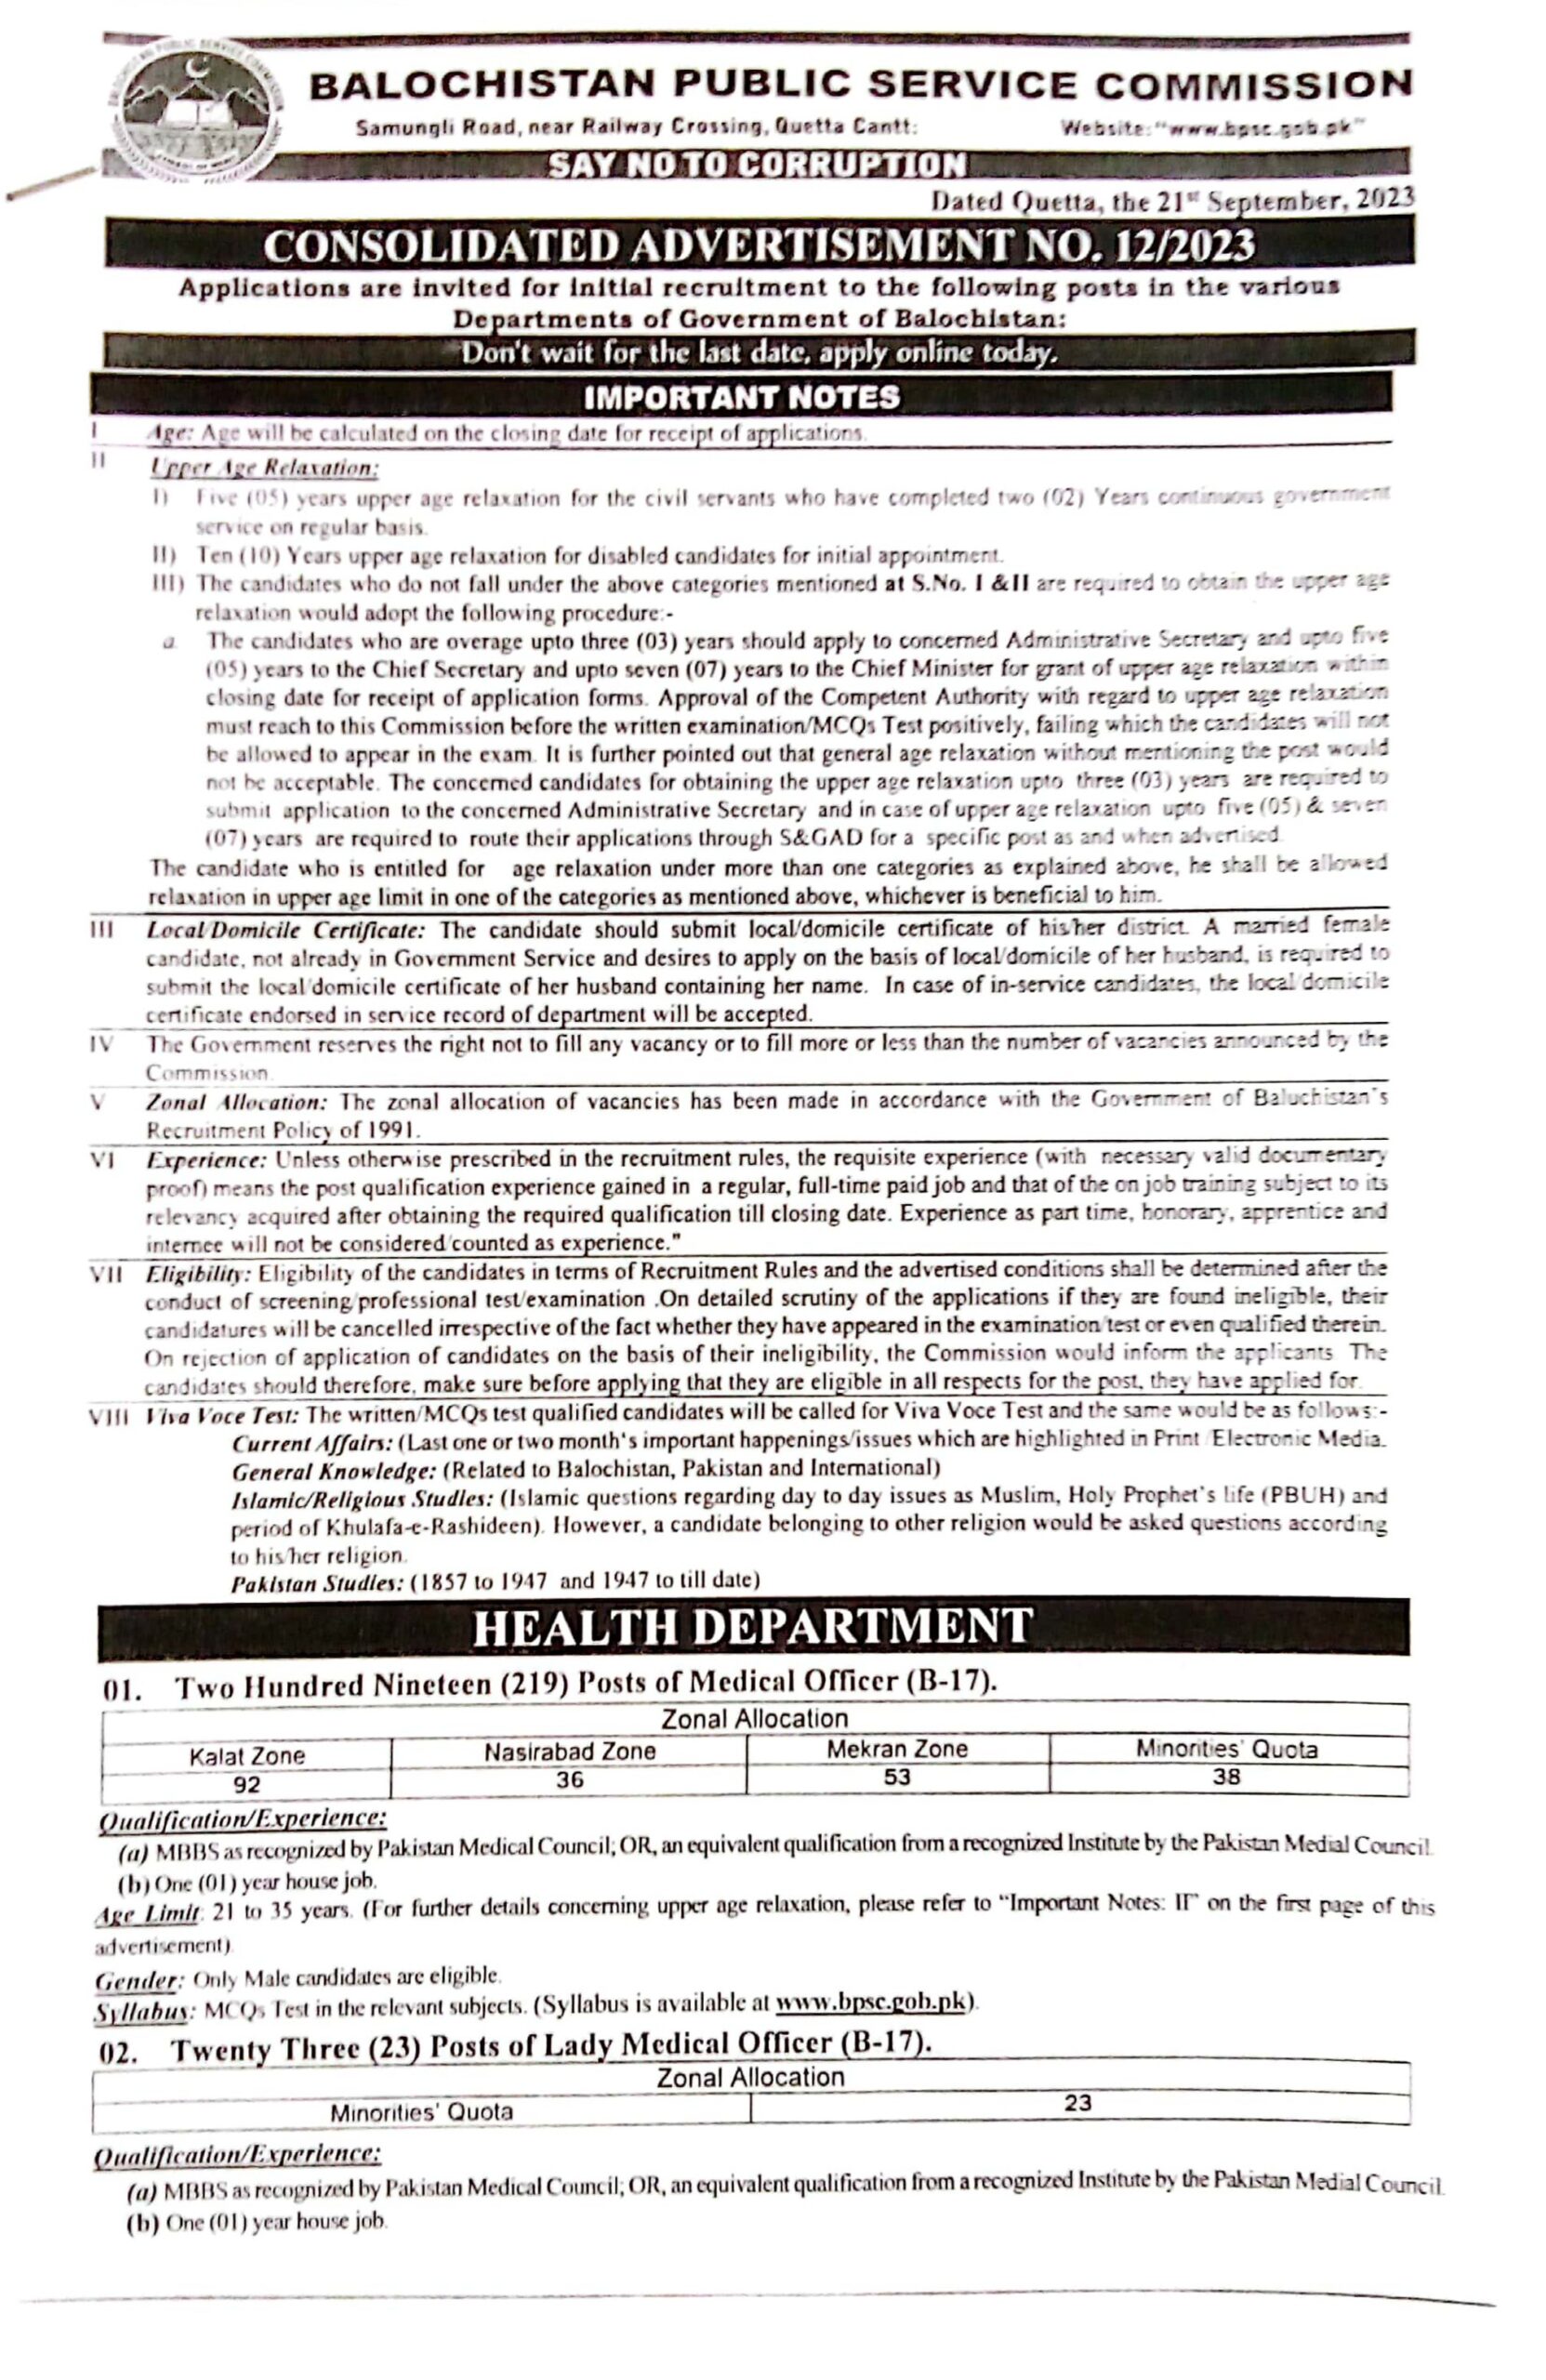 BPSC Health Department Jobs 2024 Registration Eligibility Criteria